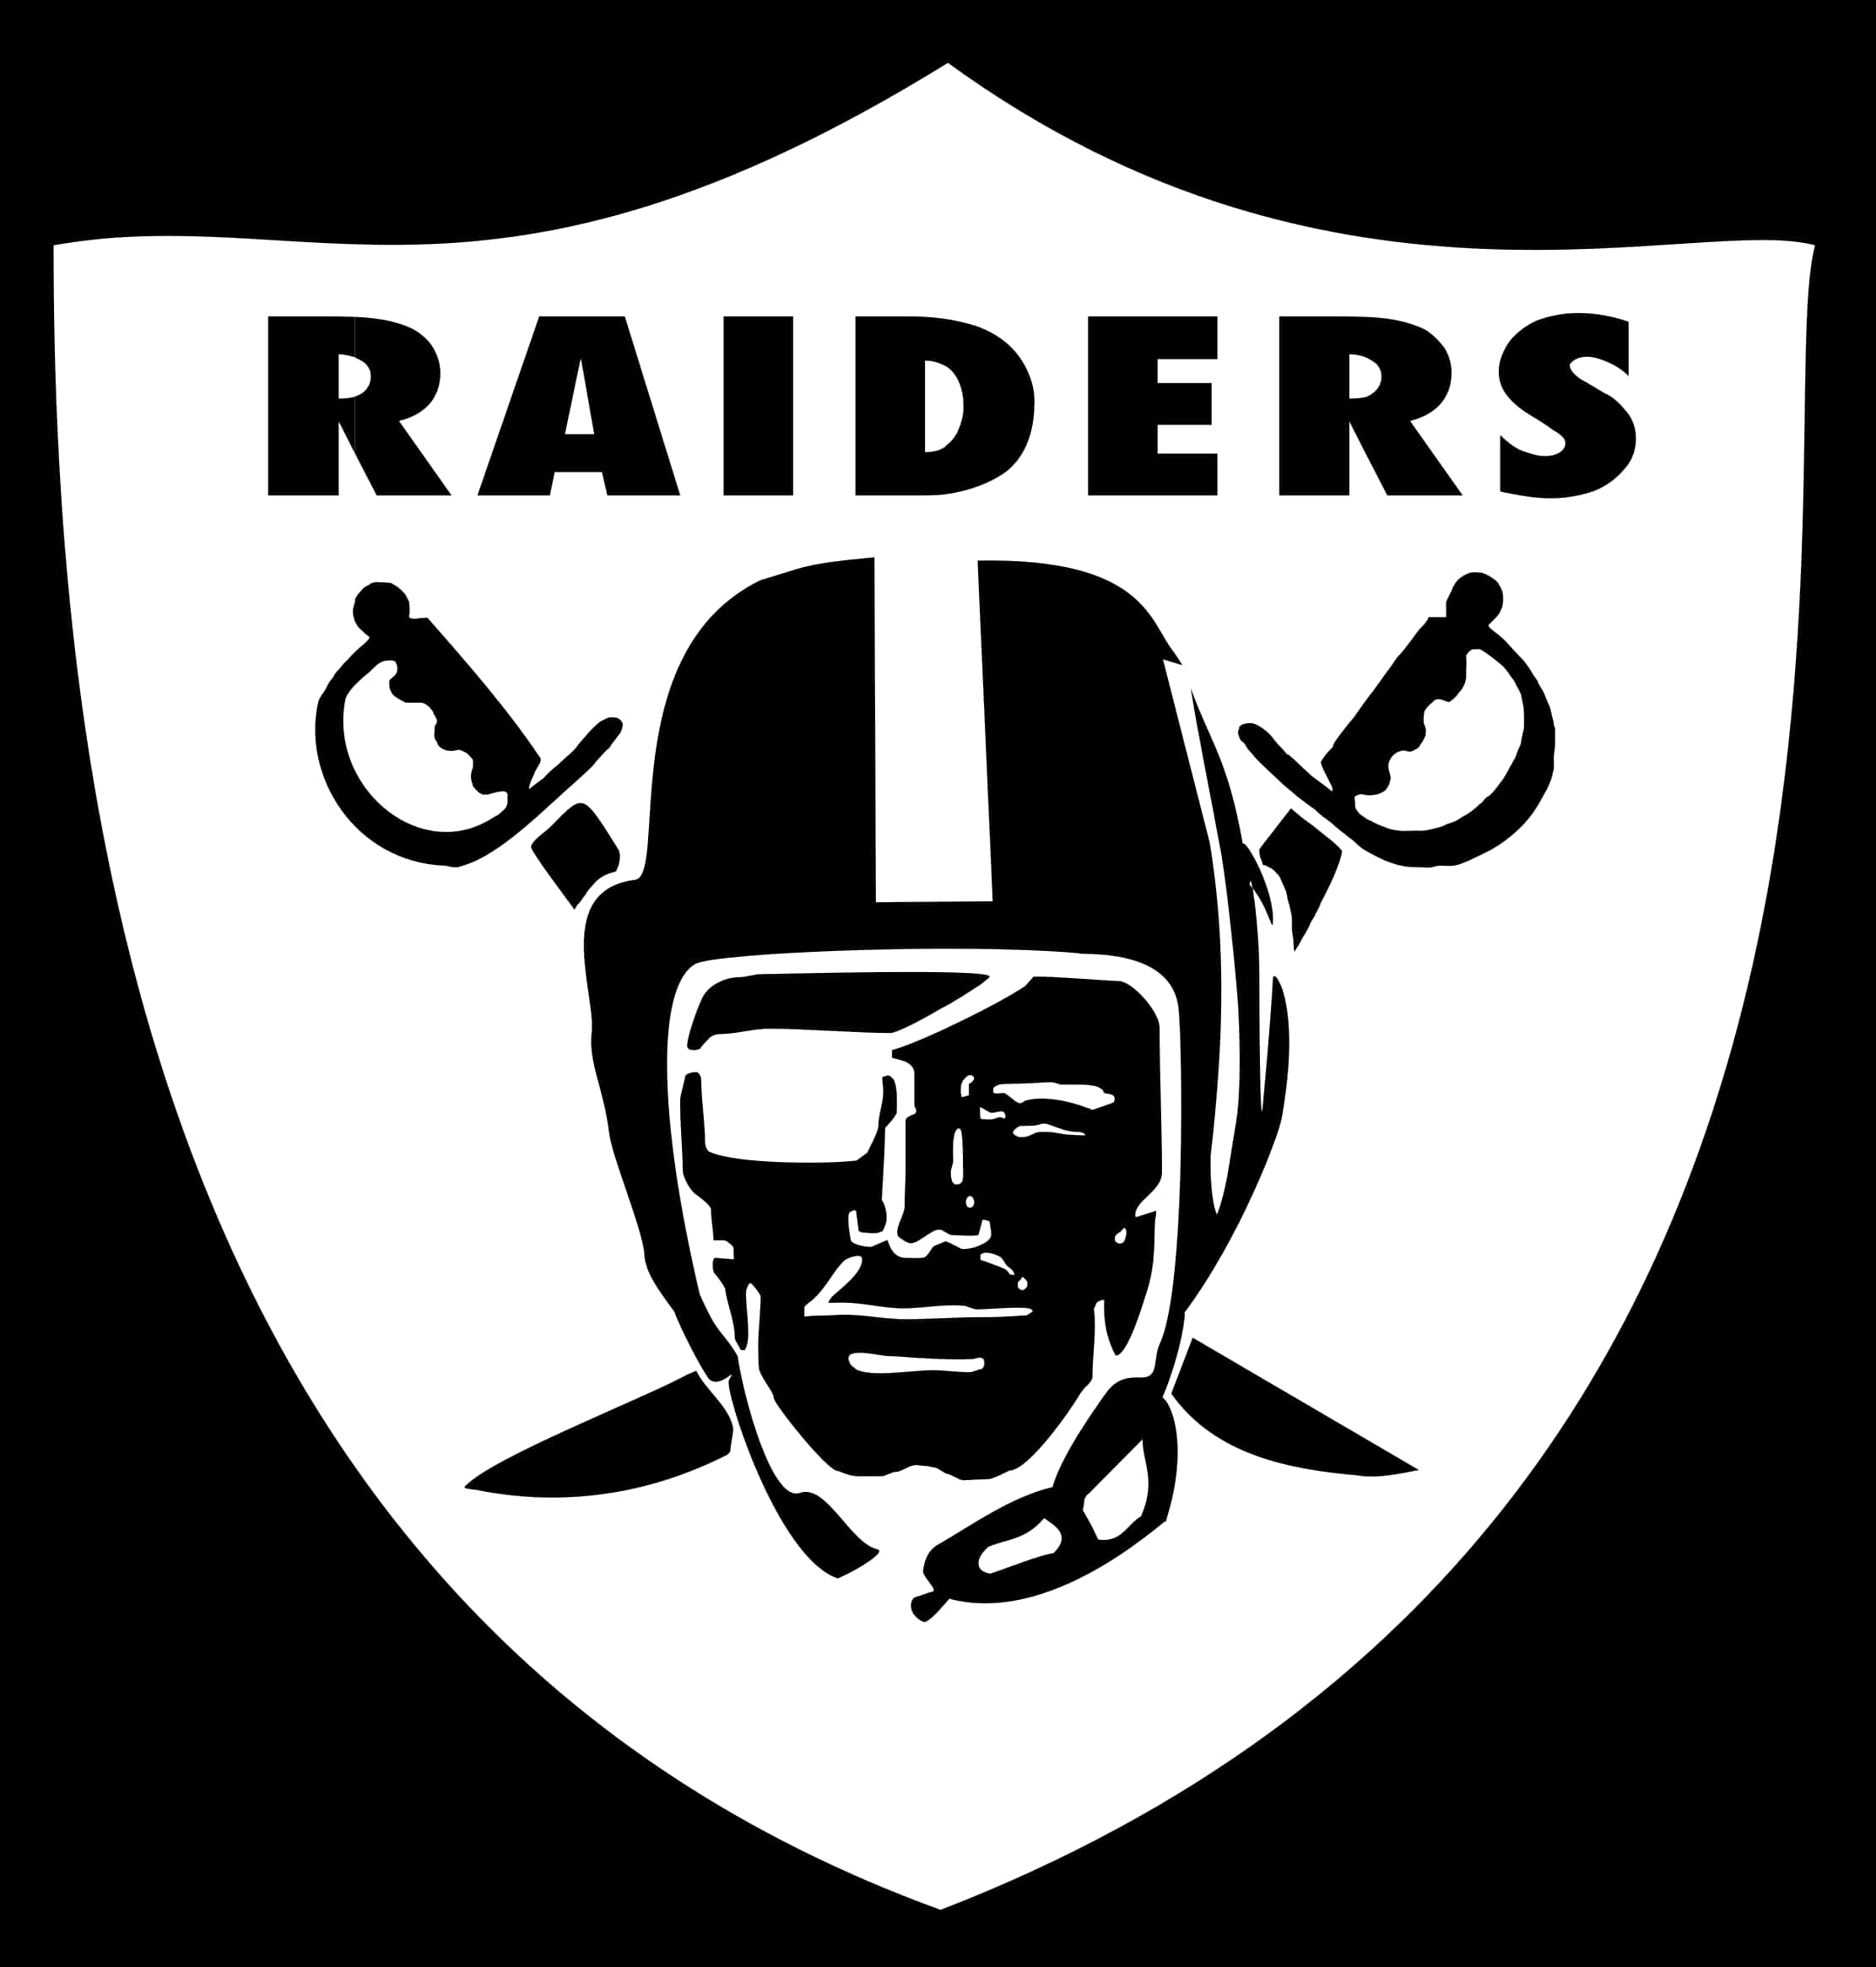 A Logo Of A Football Player